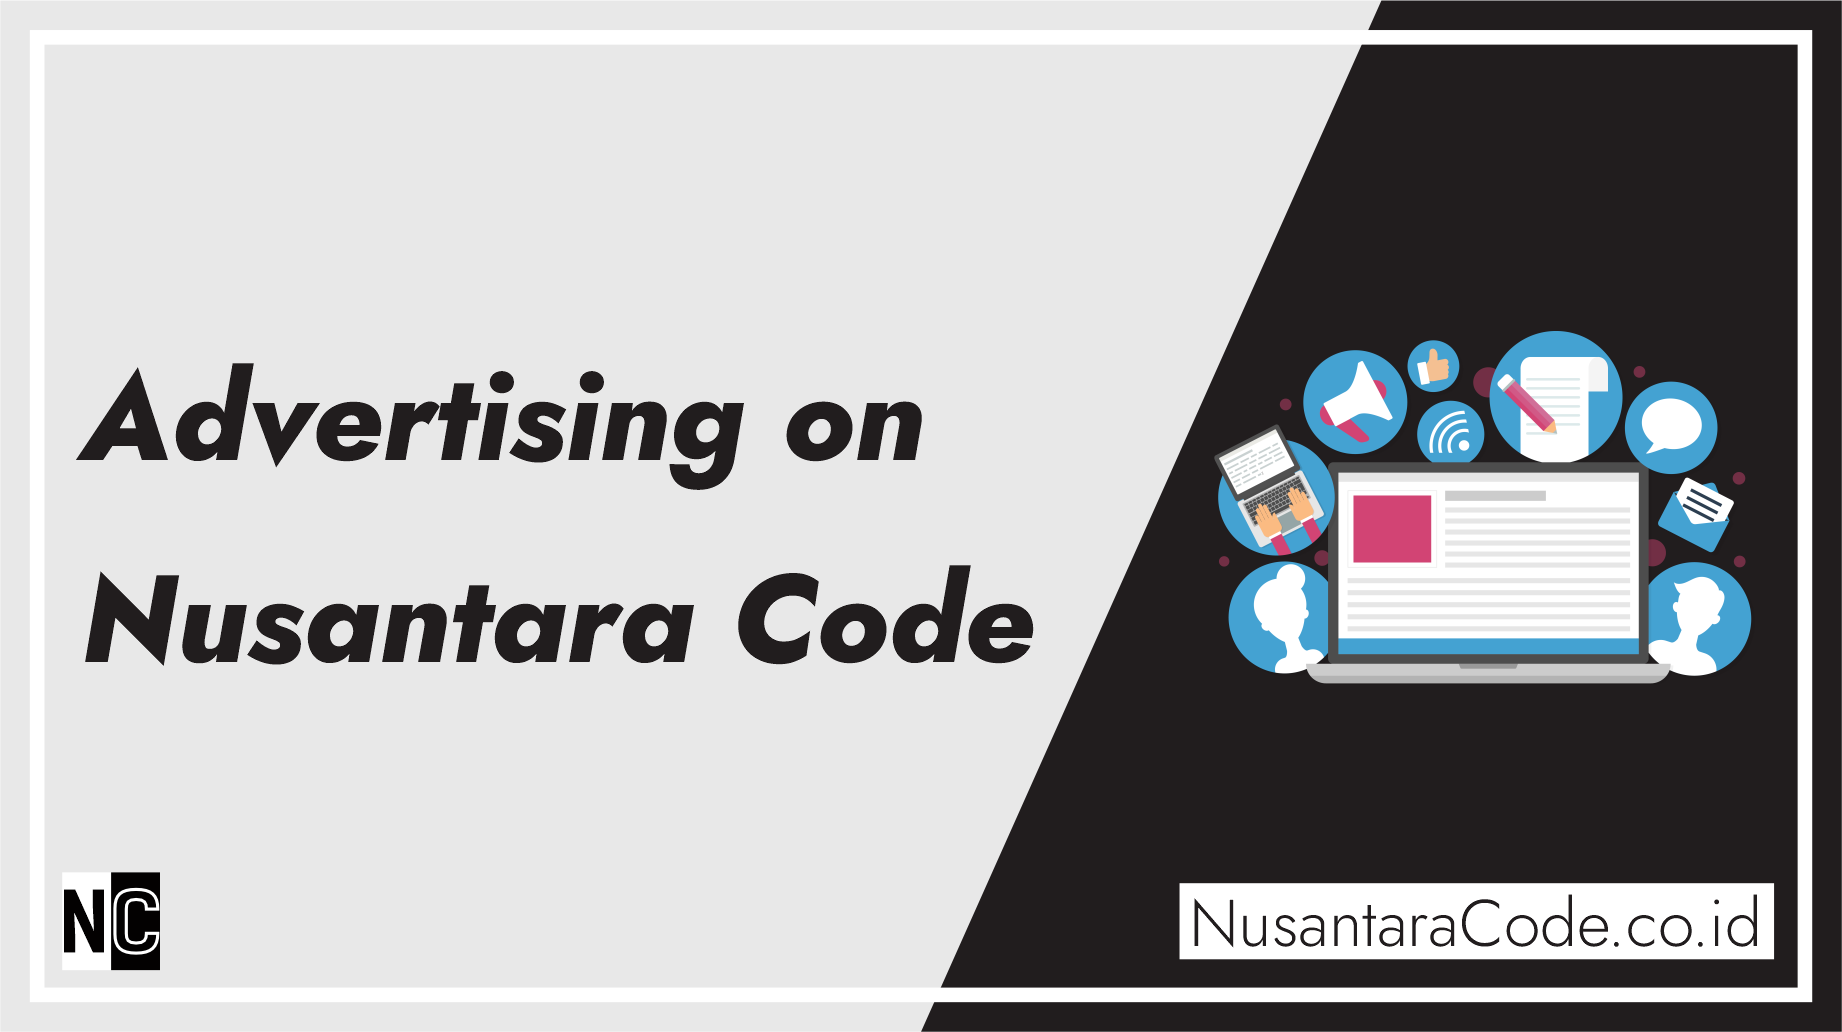 Advertising on Nusantara Code – Grow Your Business with Nusantara Code